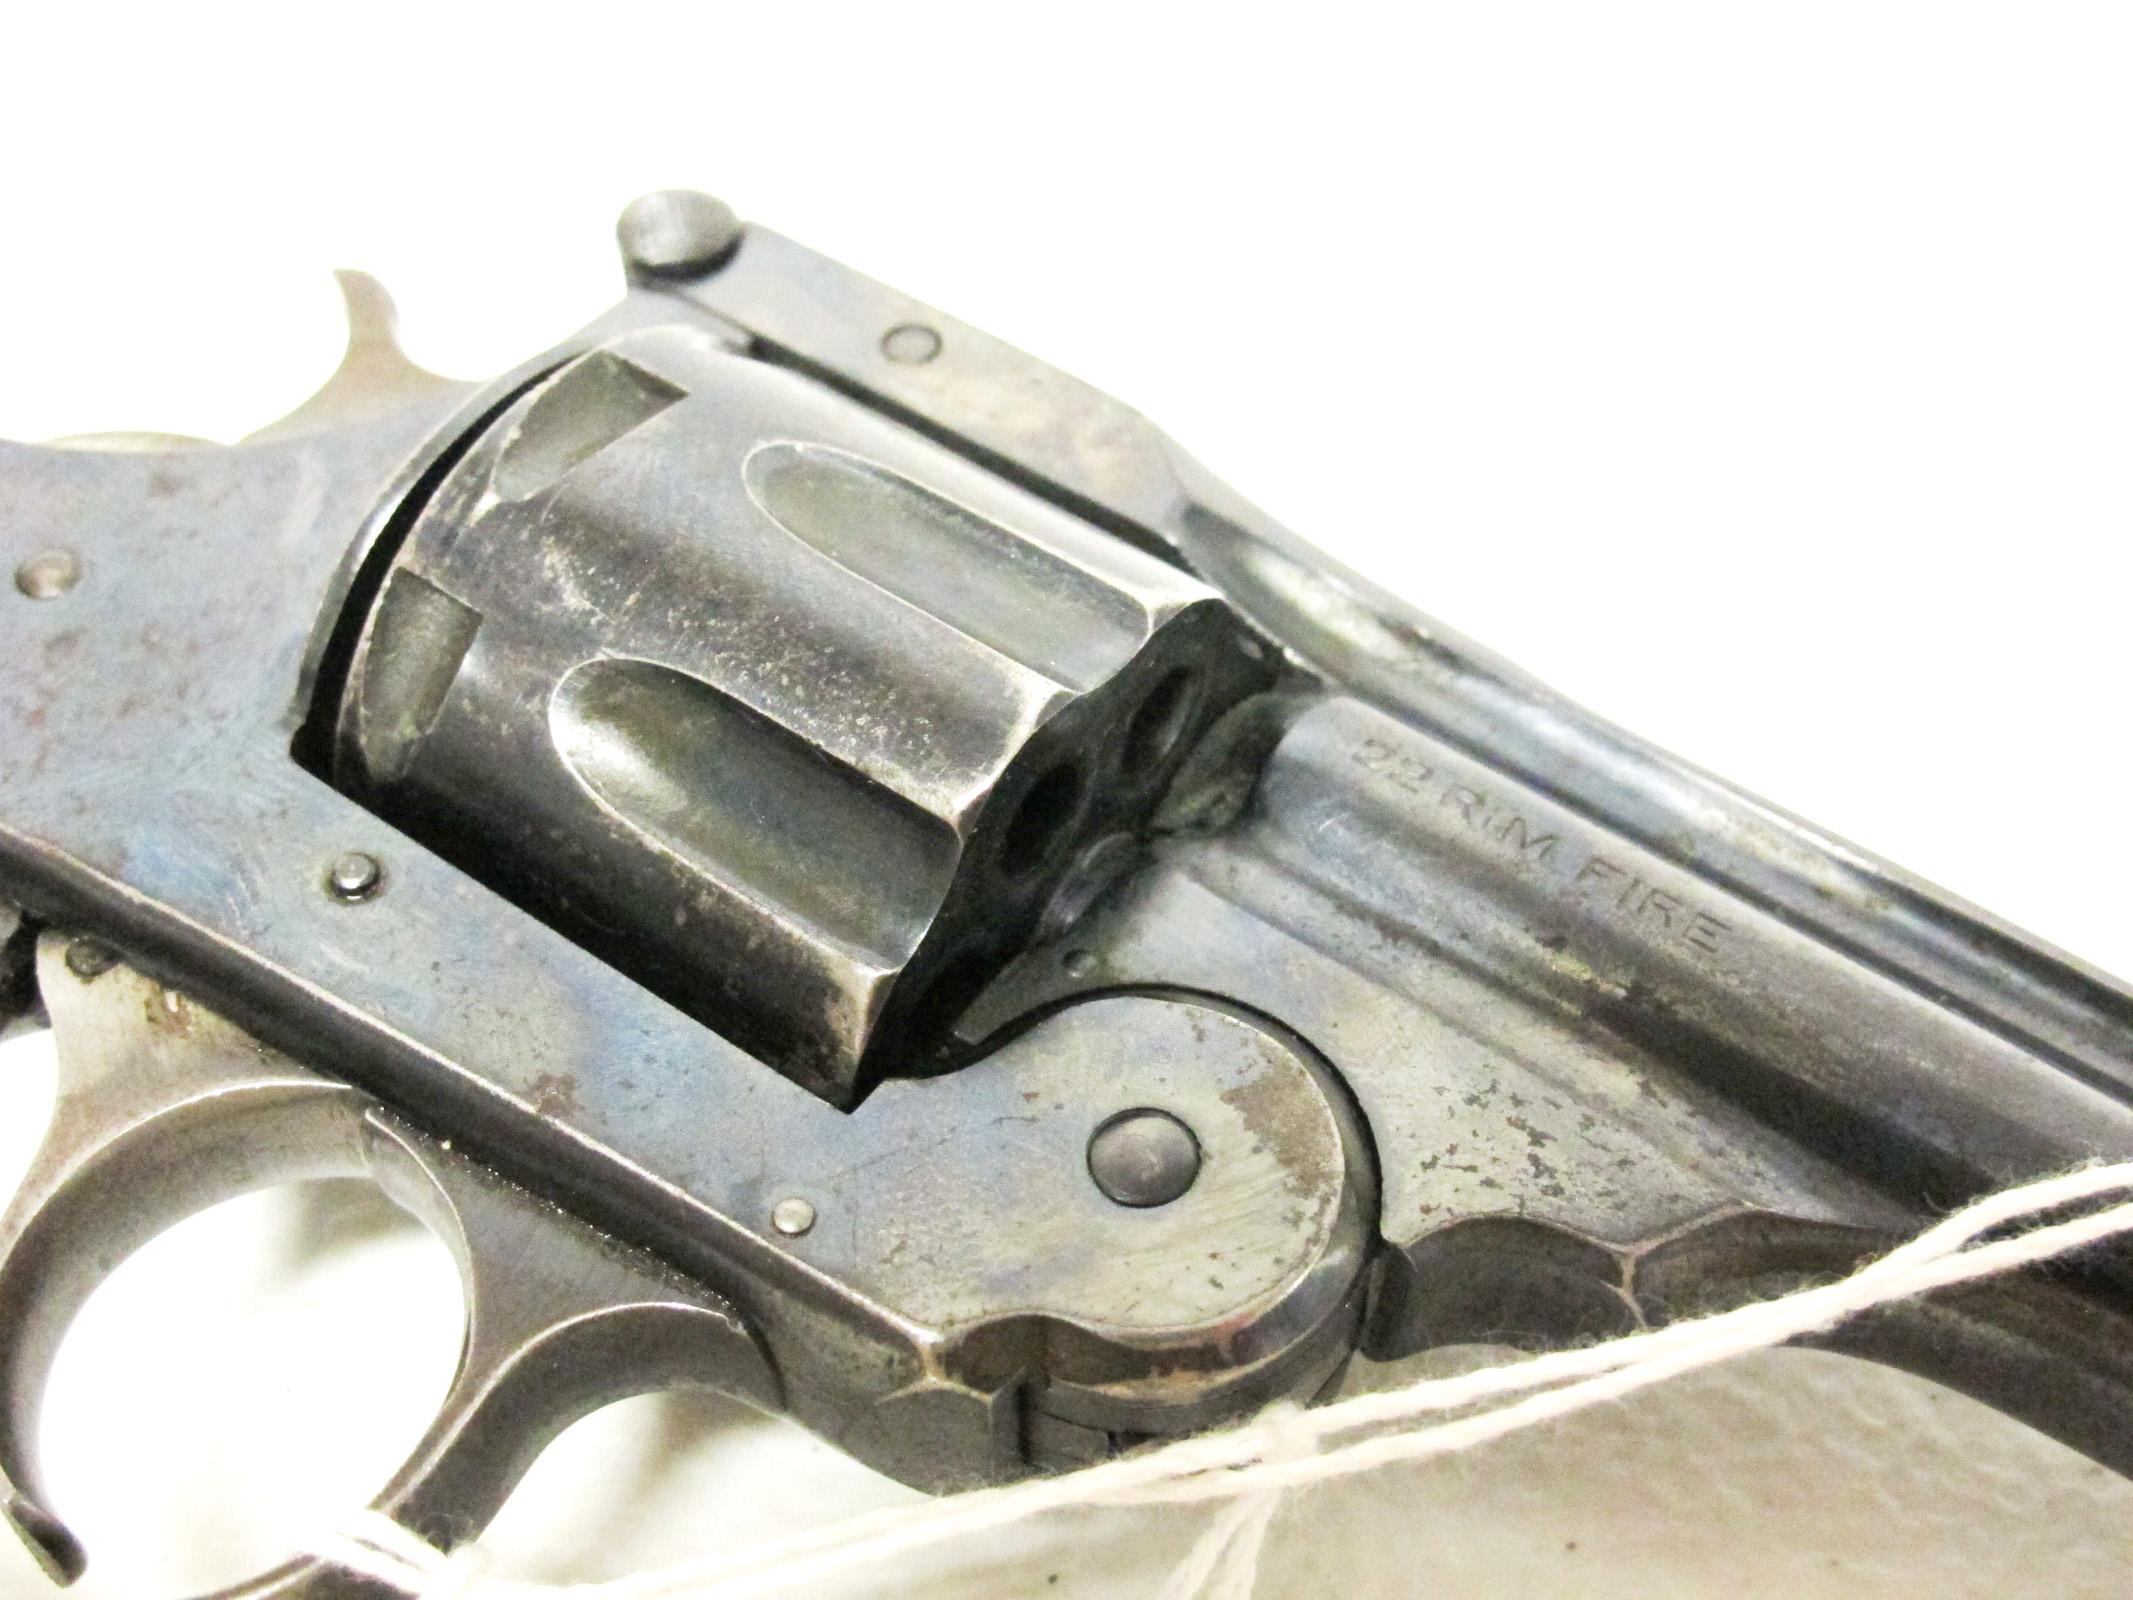 H & R 22 Special Seven Shot Revolver